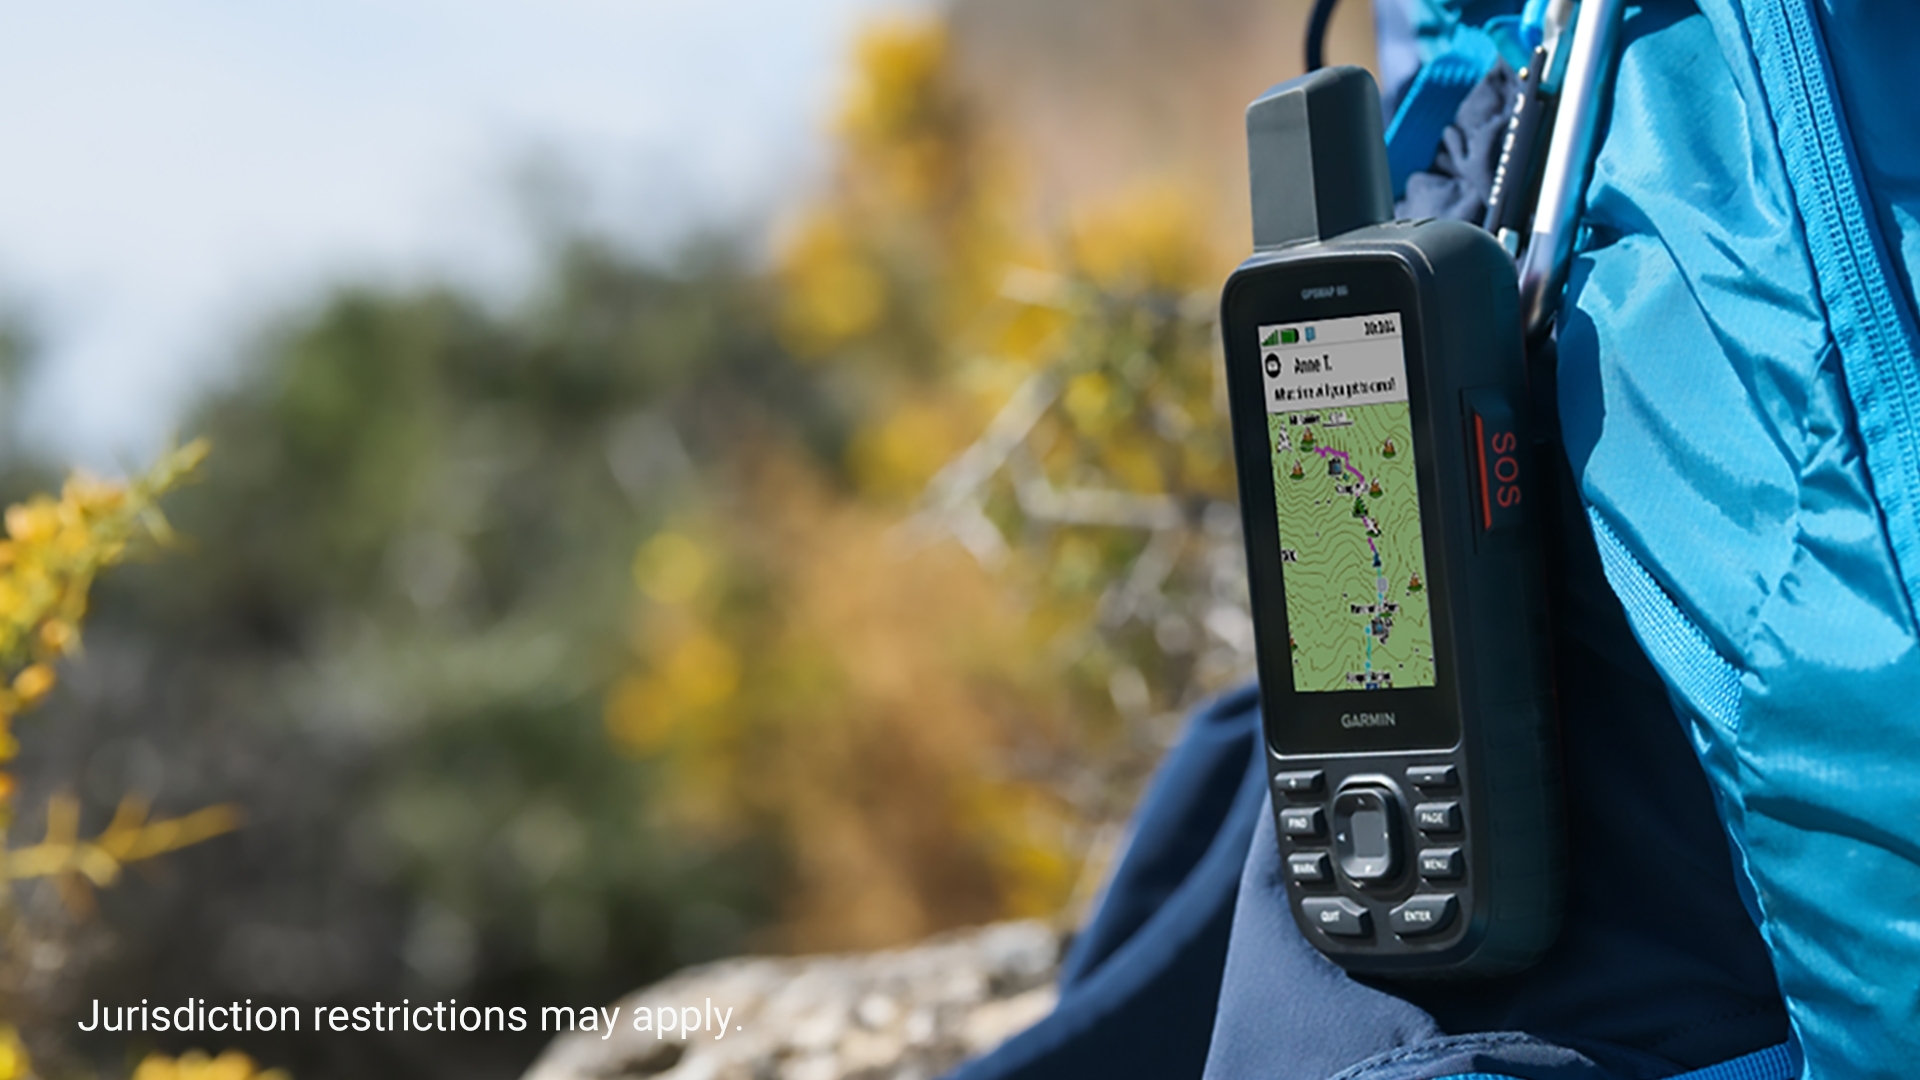 Garmin's flagship handheld navigator meets global communication